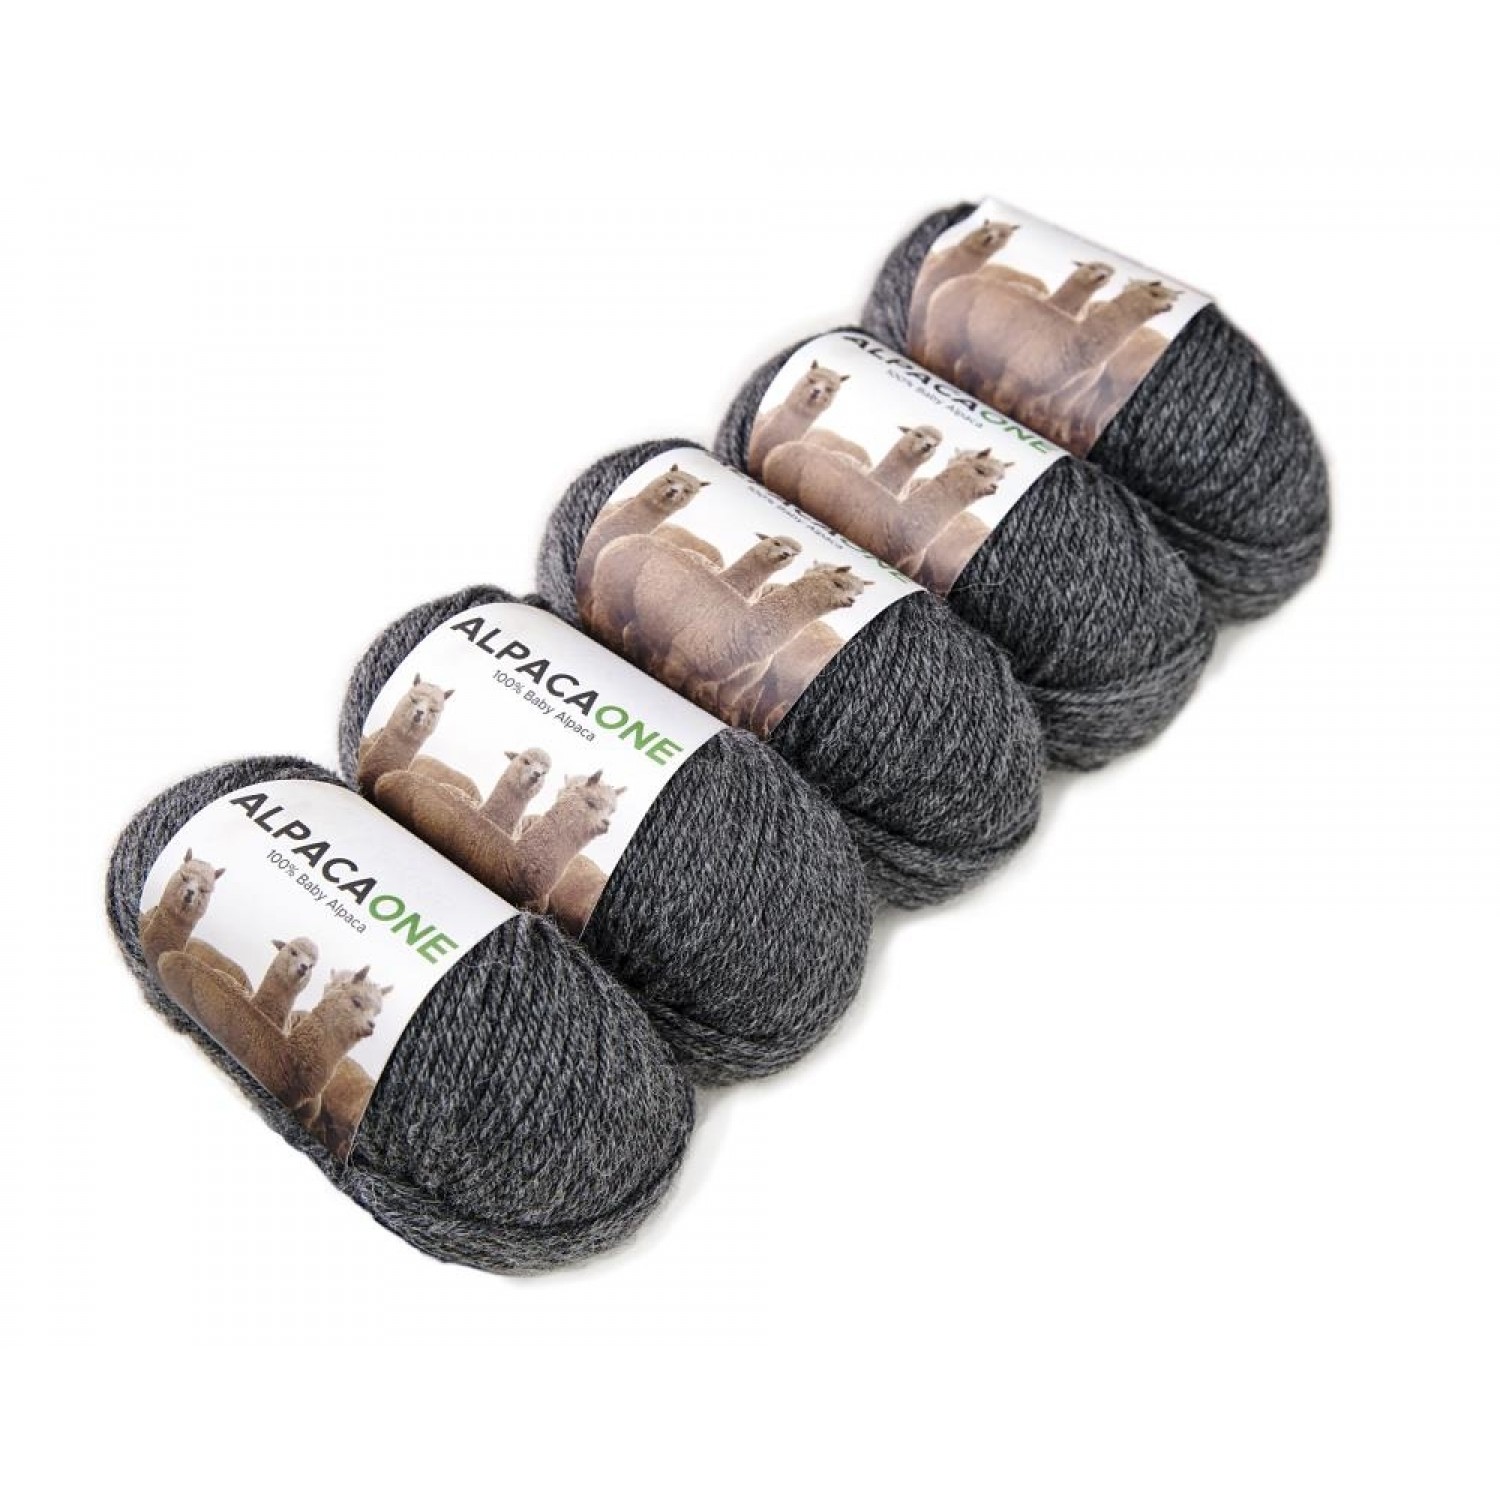 Alpacaone Baby Alpaca wool ball 5 pack mid grey, OEKO-TEX